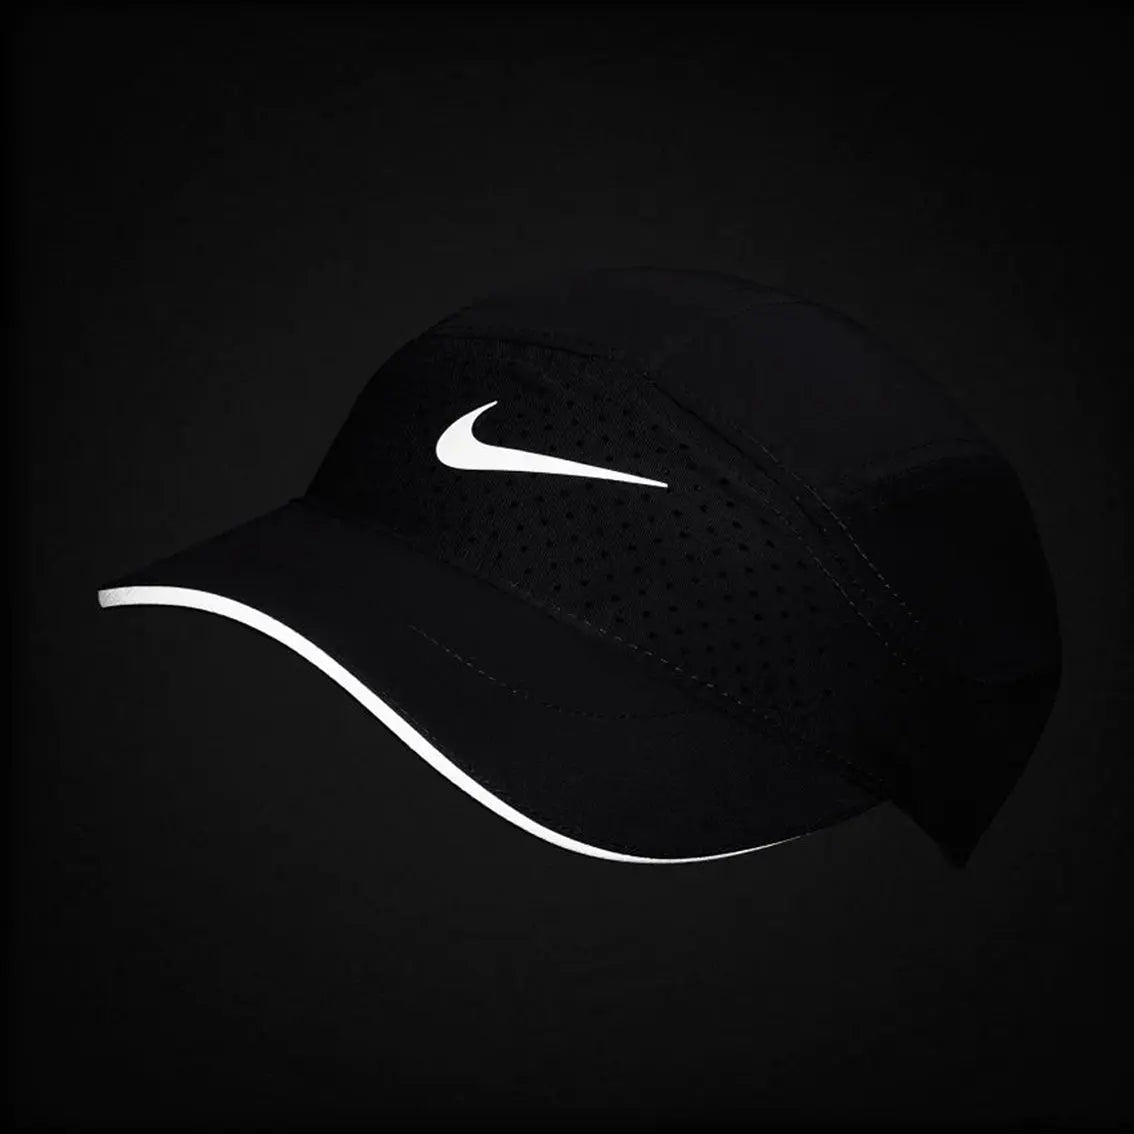 Nike Dry AeroBill Tailwind Elite Cap